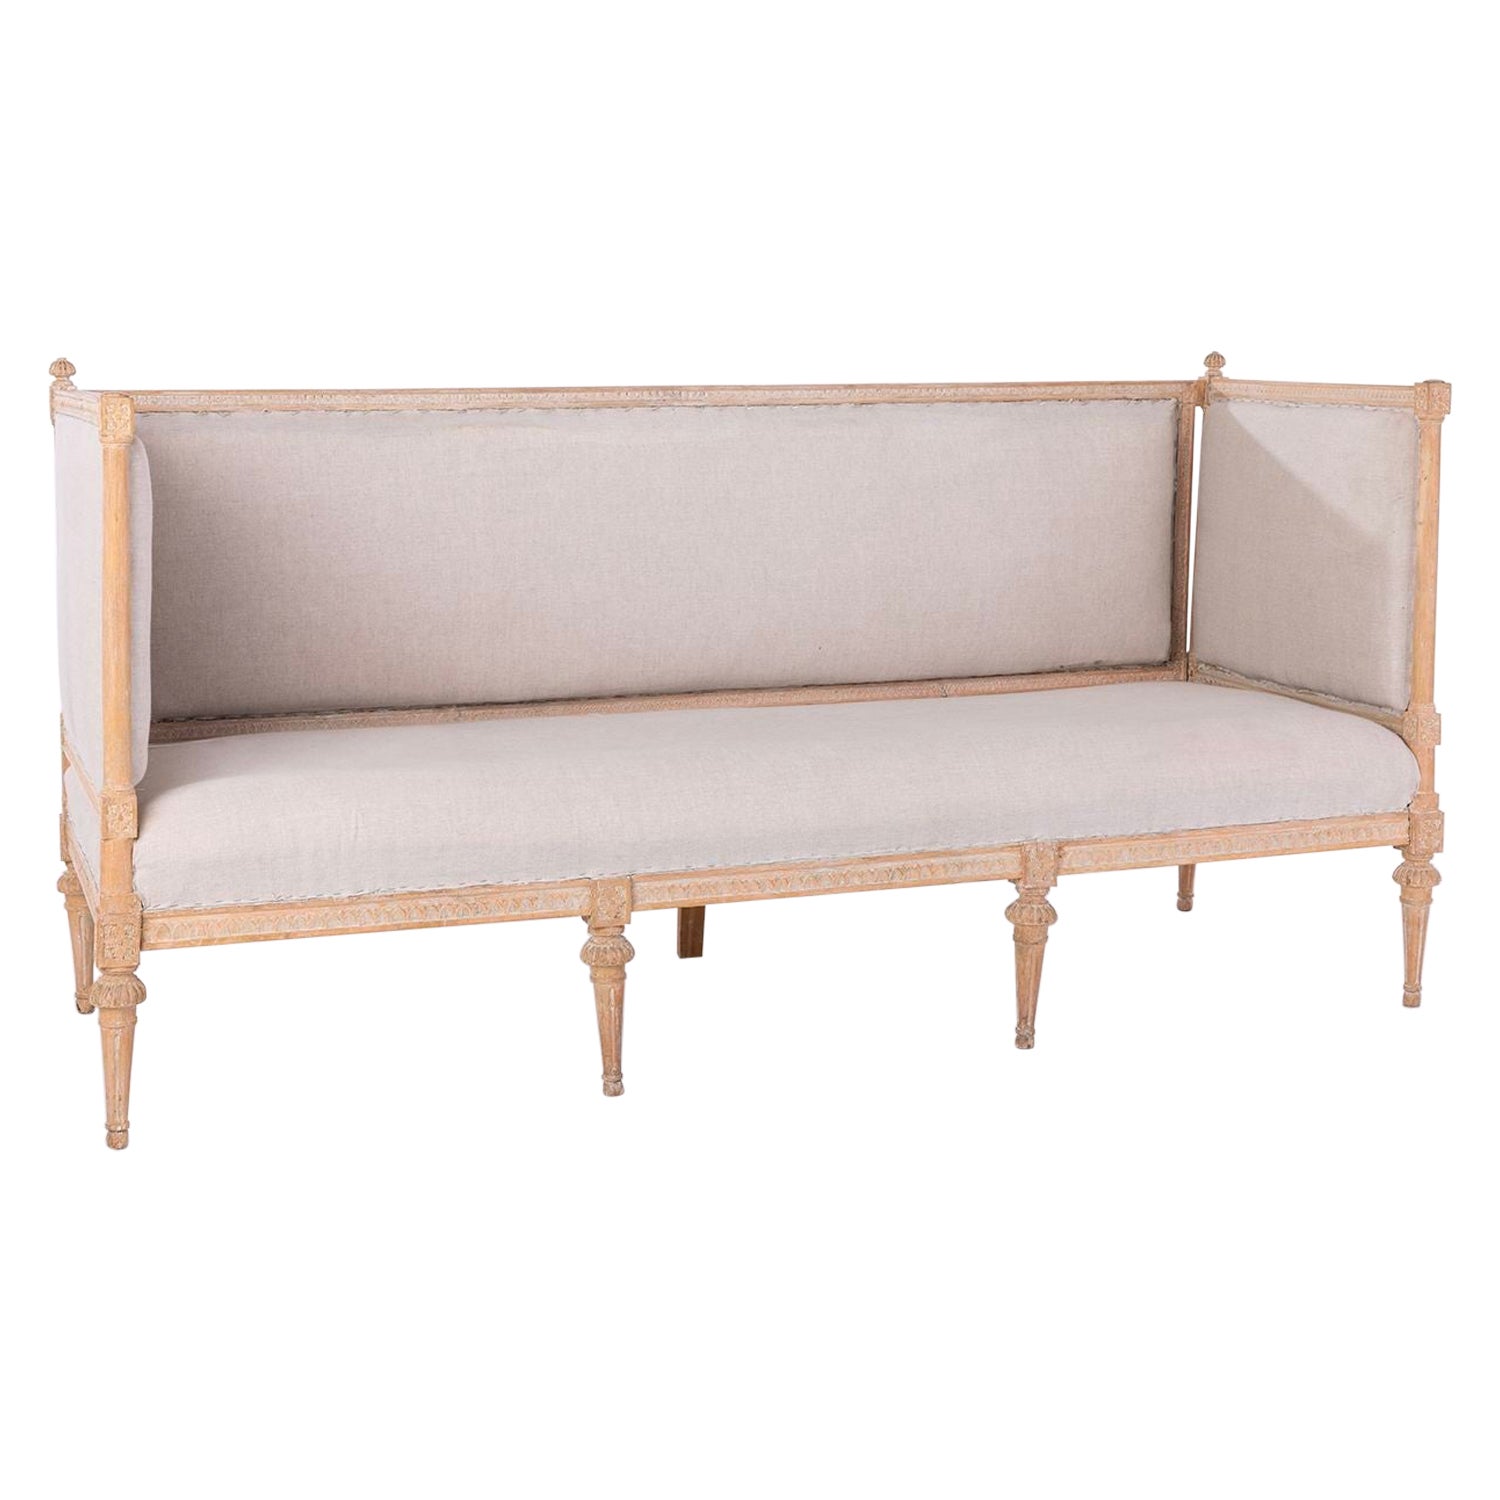 19th c. Swedish Gustavian Style Sofa Bench in Original Patina For Sale